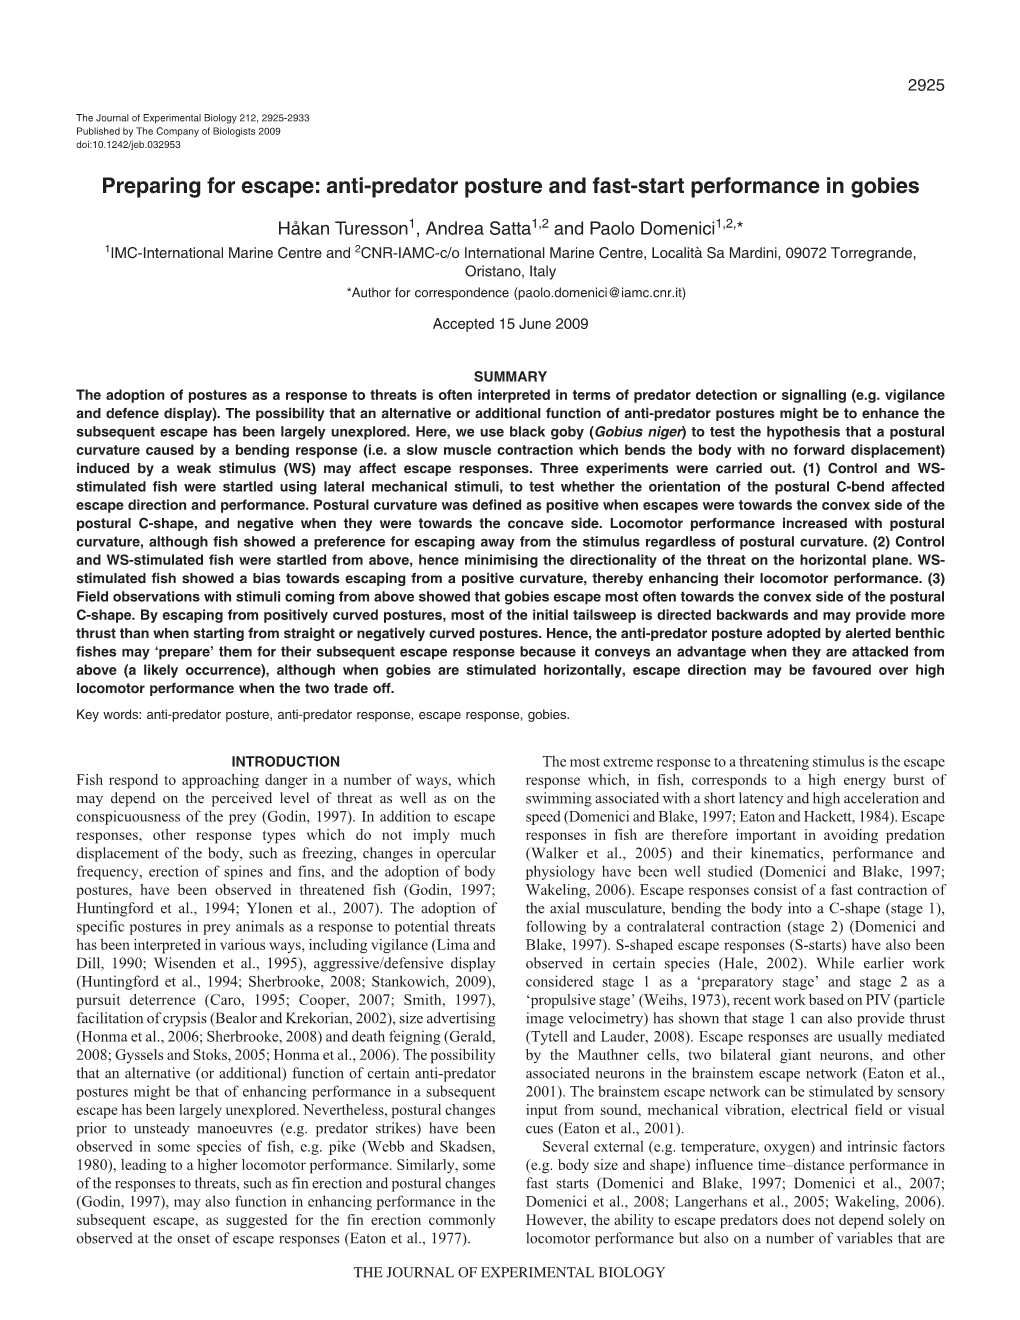 Anti-Predator Posture and Fast-Start Performance in Gobies